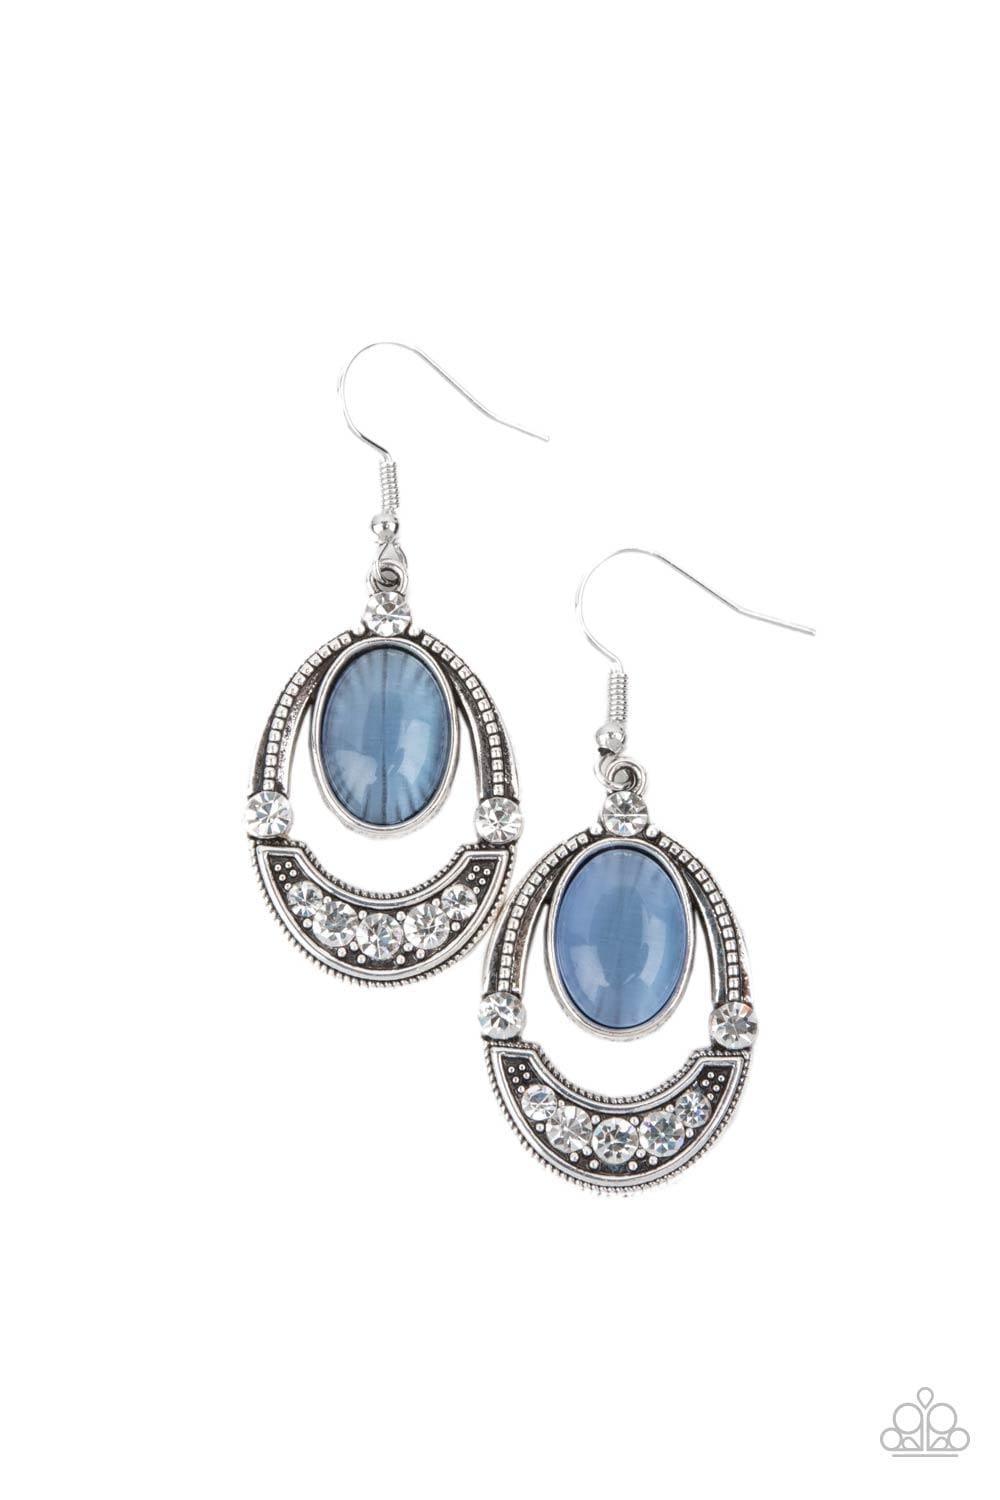 Paparazzi Accessories - Serene Shimmer - Blue Earrings - Bling by JessieK